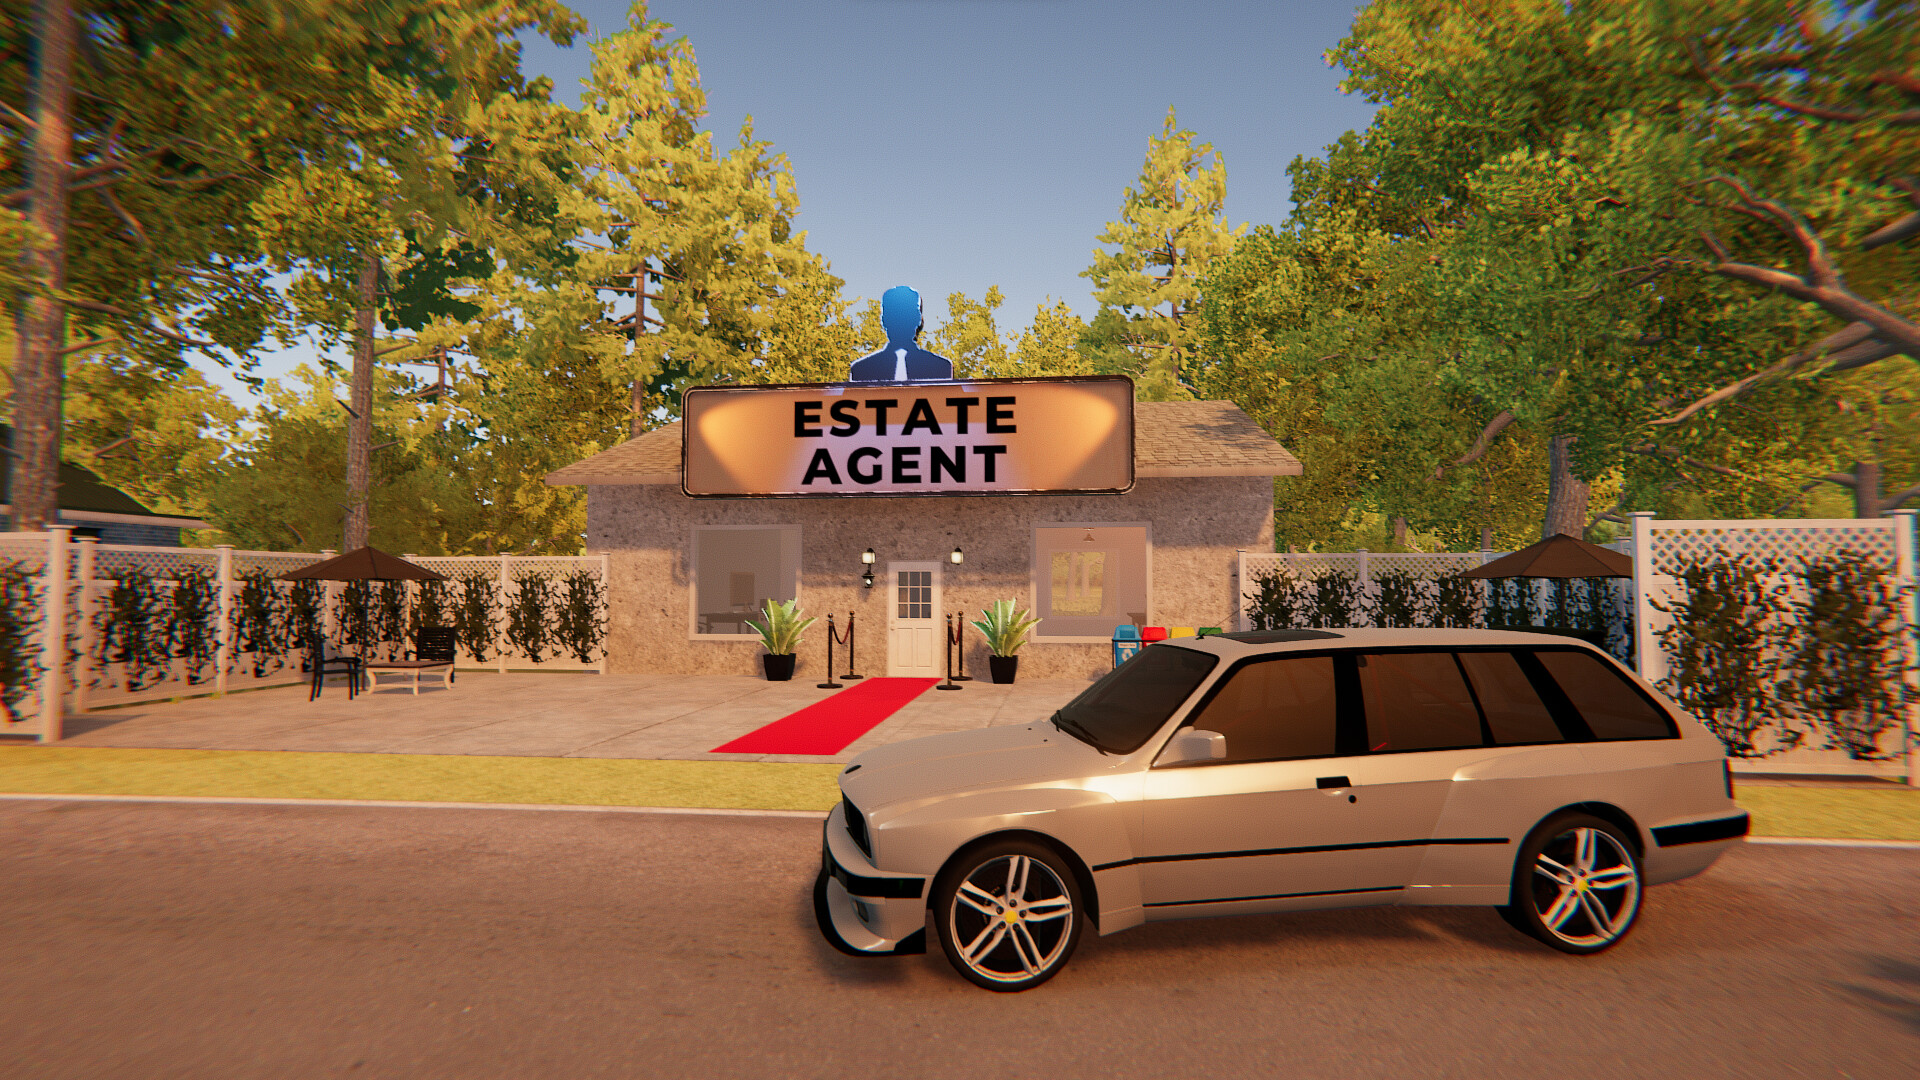 Estate Agent Simulator Steam CD Key